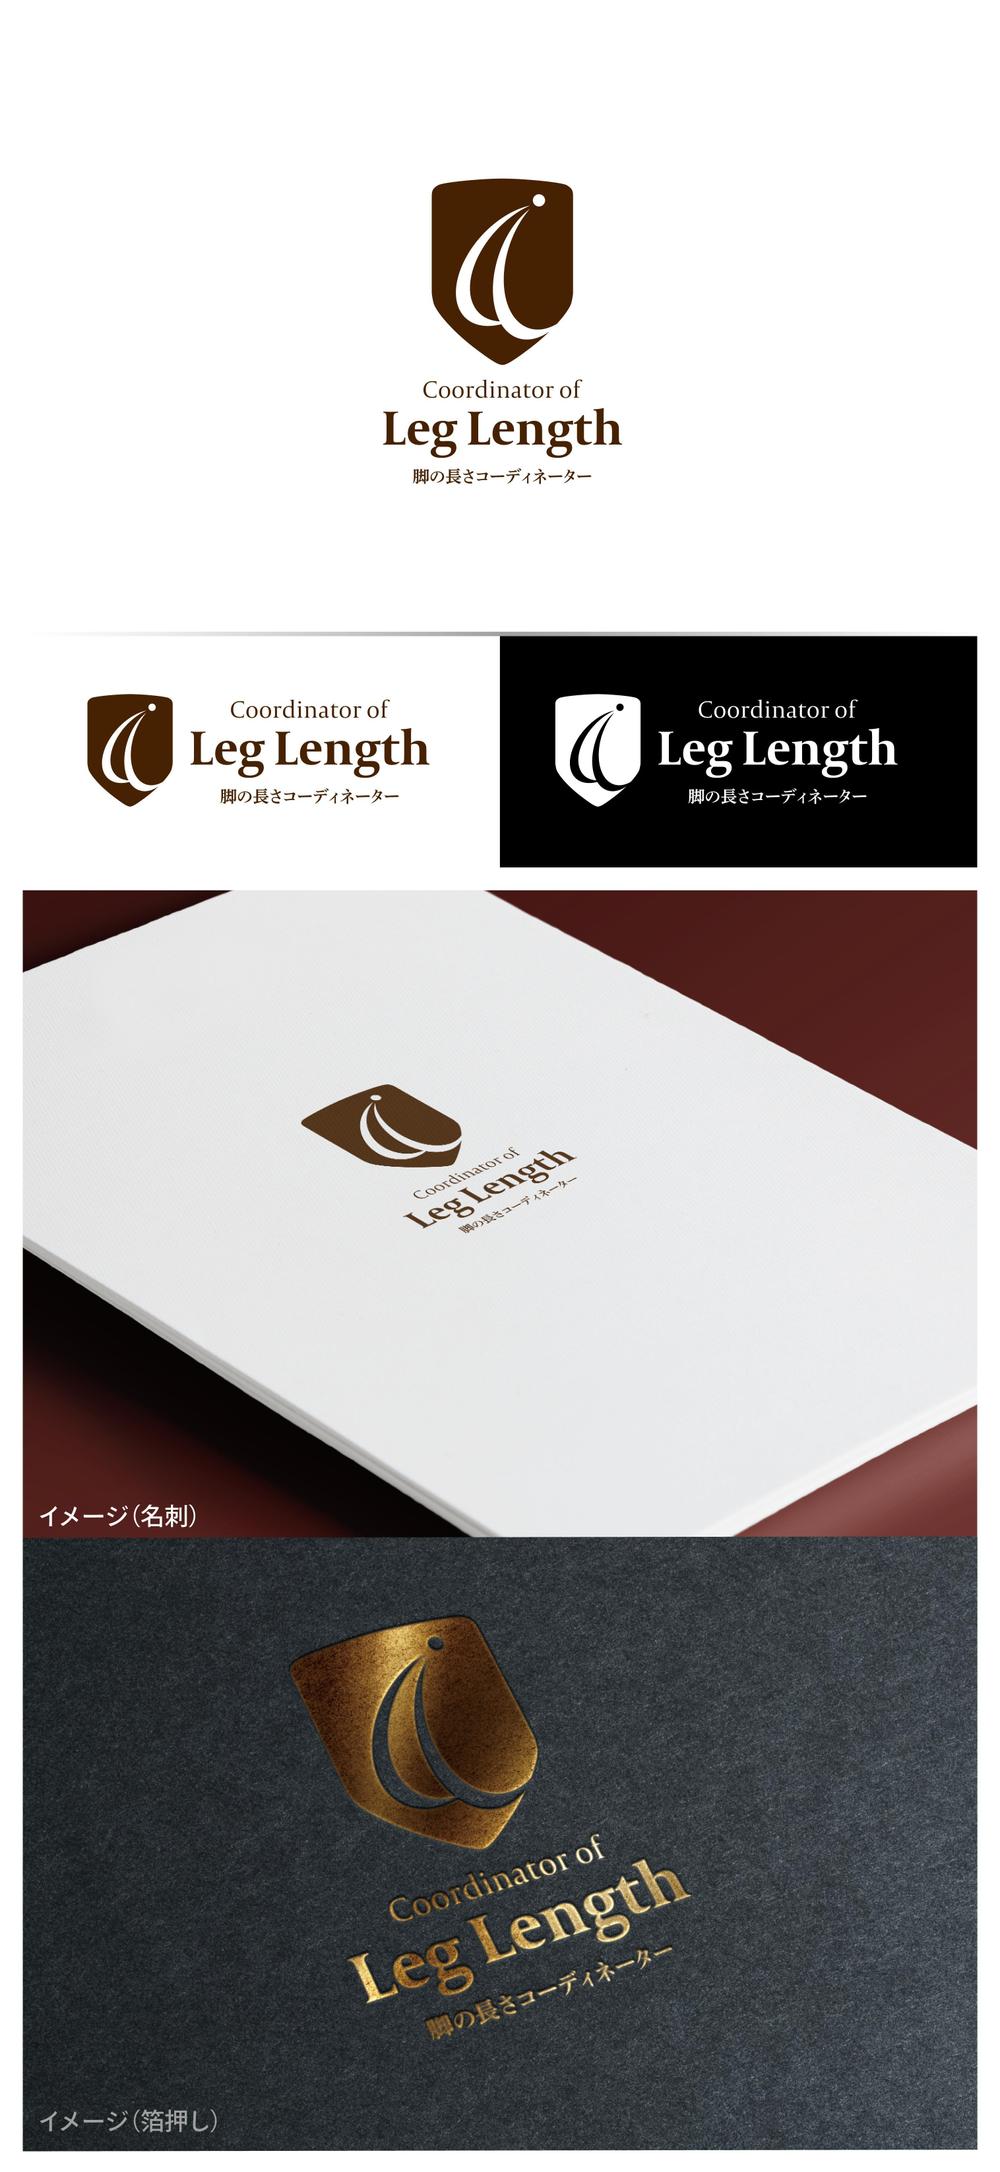 Coordinator of Leg Length_logo01_01.jpg